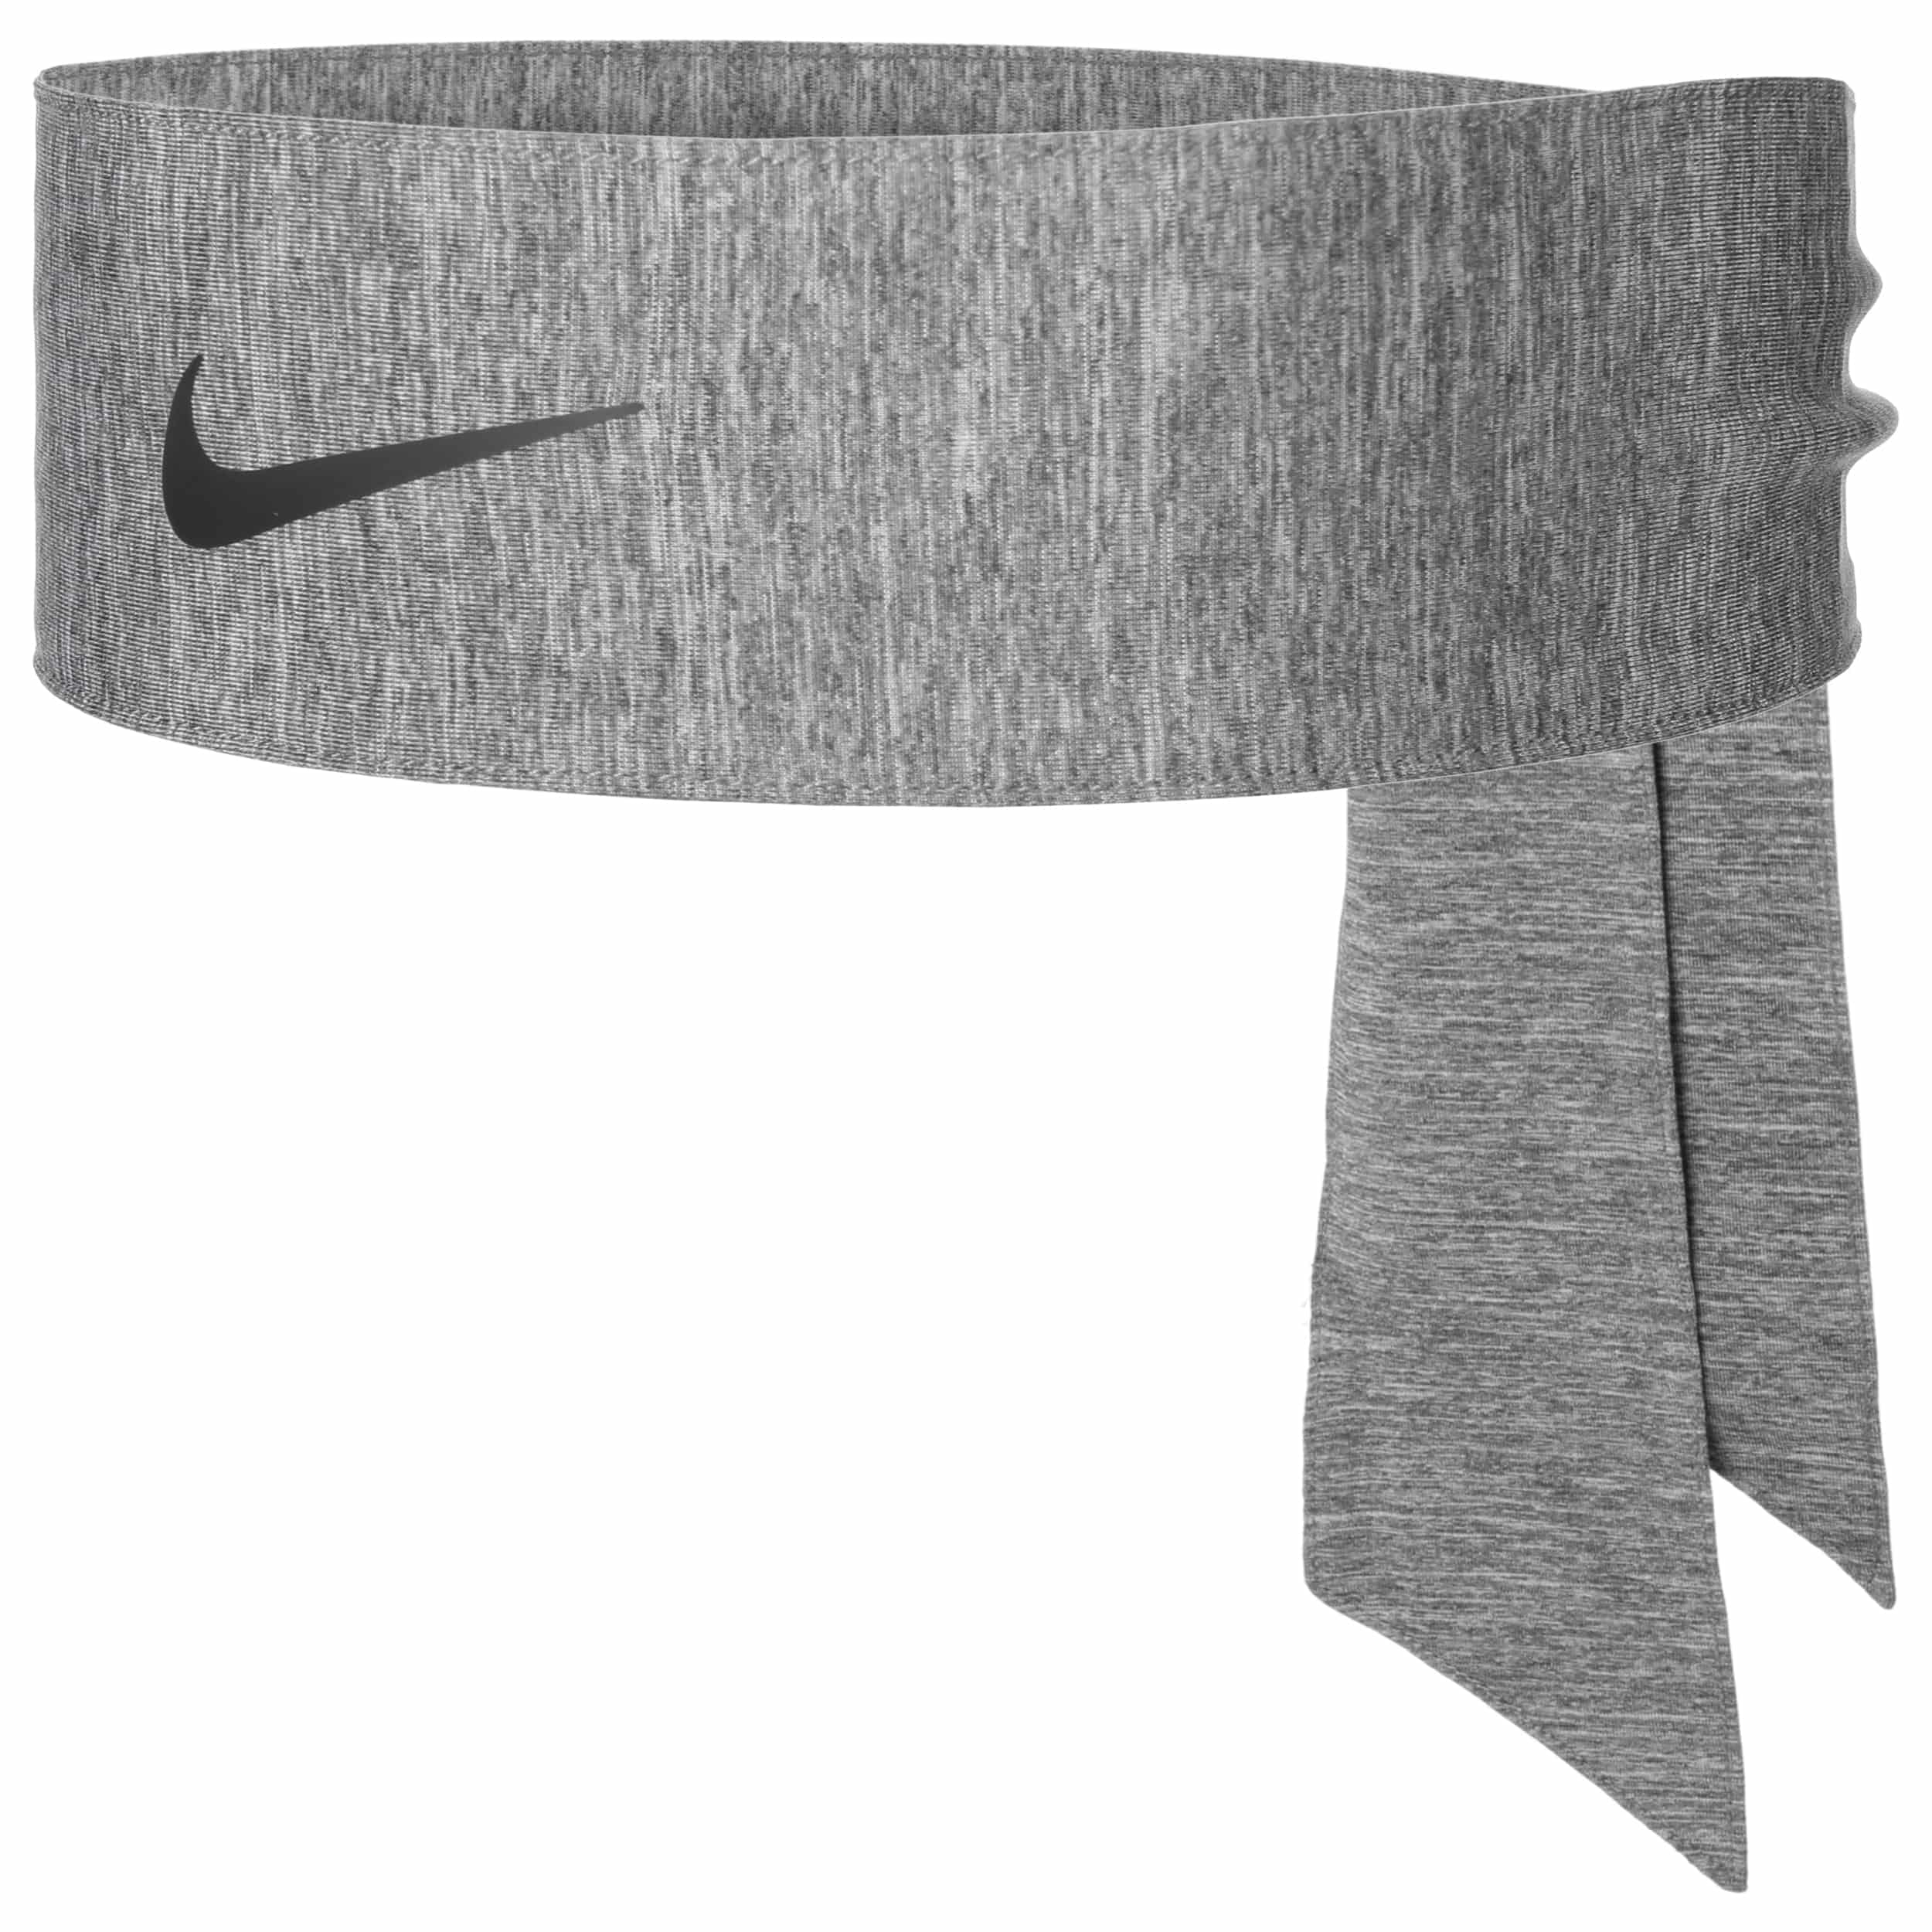 Associëren Trots Moeras Dri-Fit Head Tie 3.0 Headband by Nike - 17,95 €